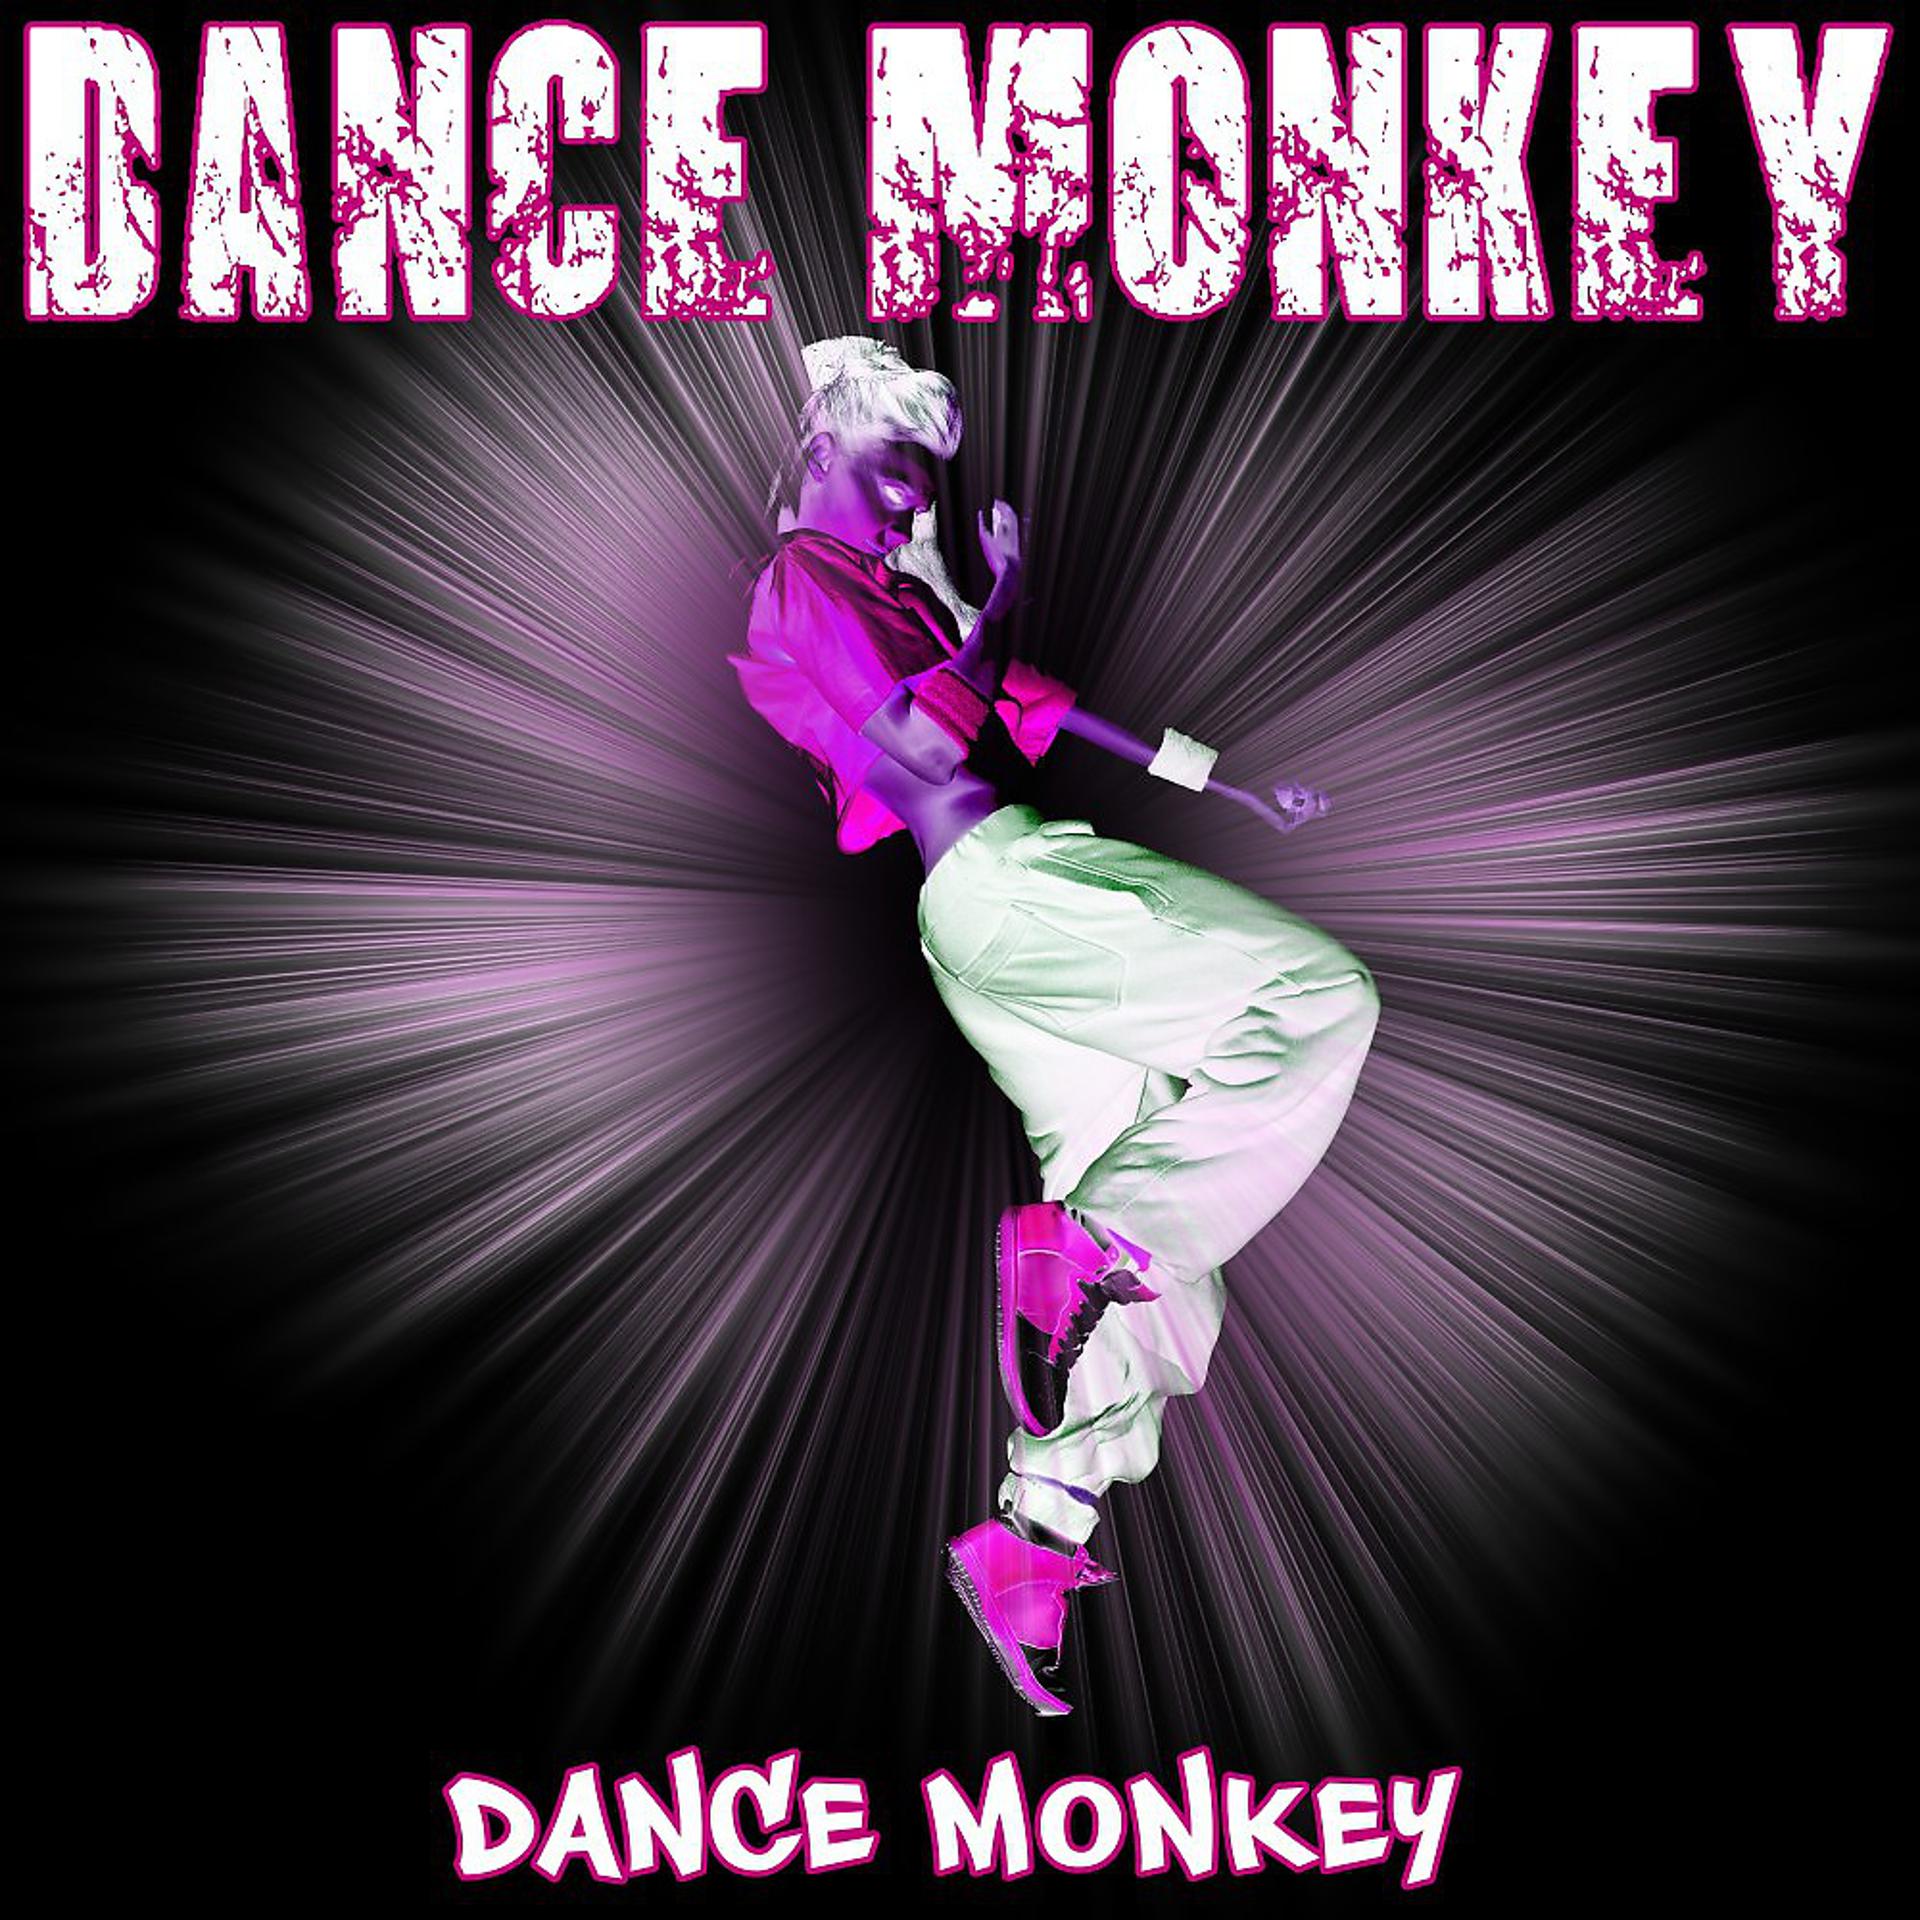 Данце монкеу. Tones and Dance Monkey исполнитель. Dance Monkey альбом. Манки дэнс дэнс. Песню танцуй танцуй данс данс